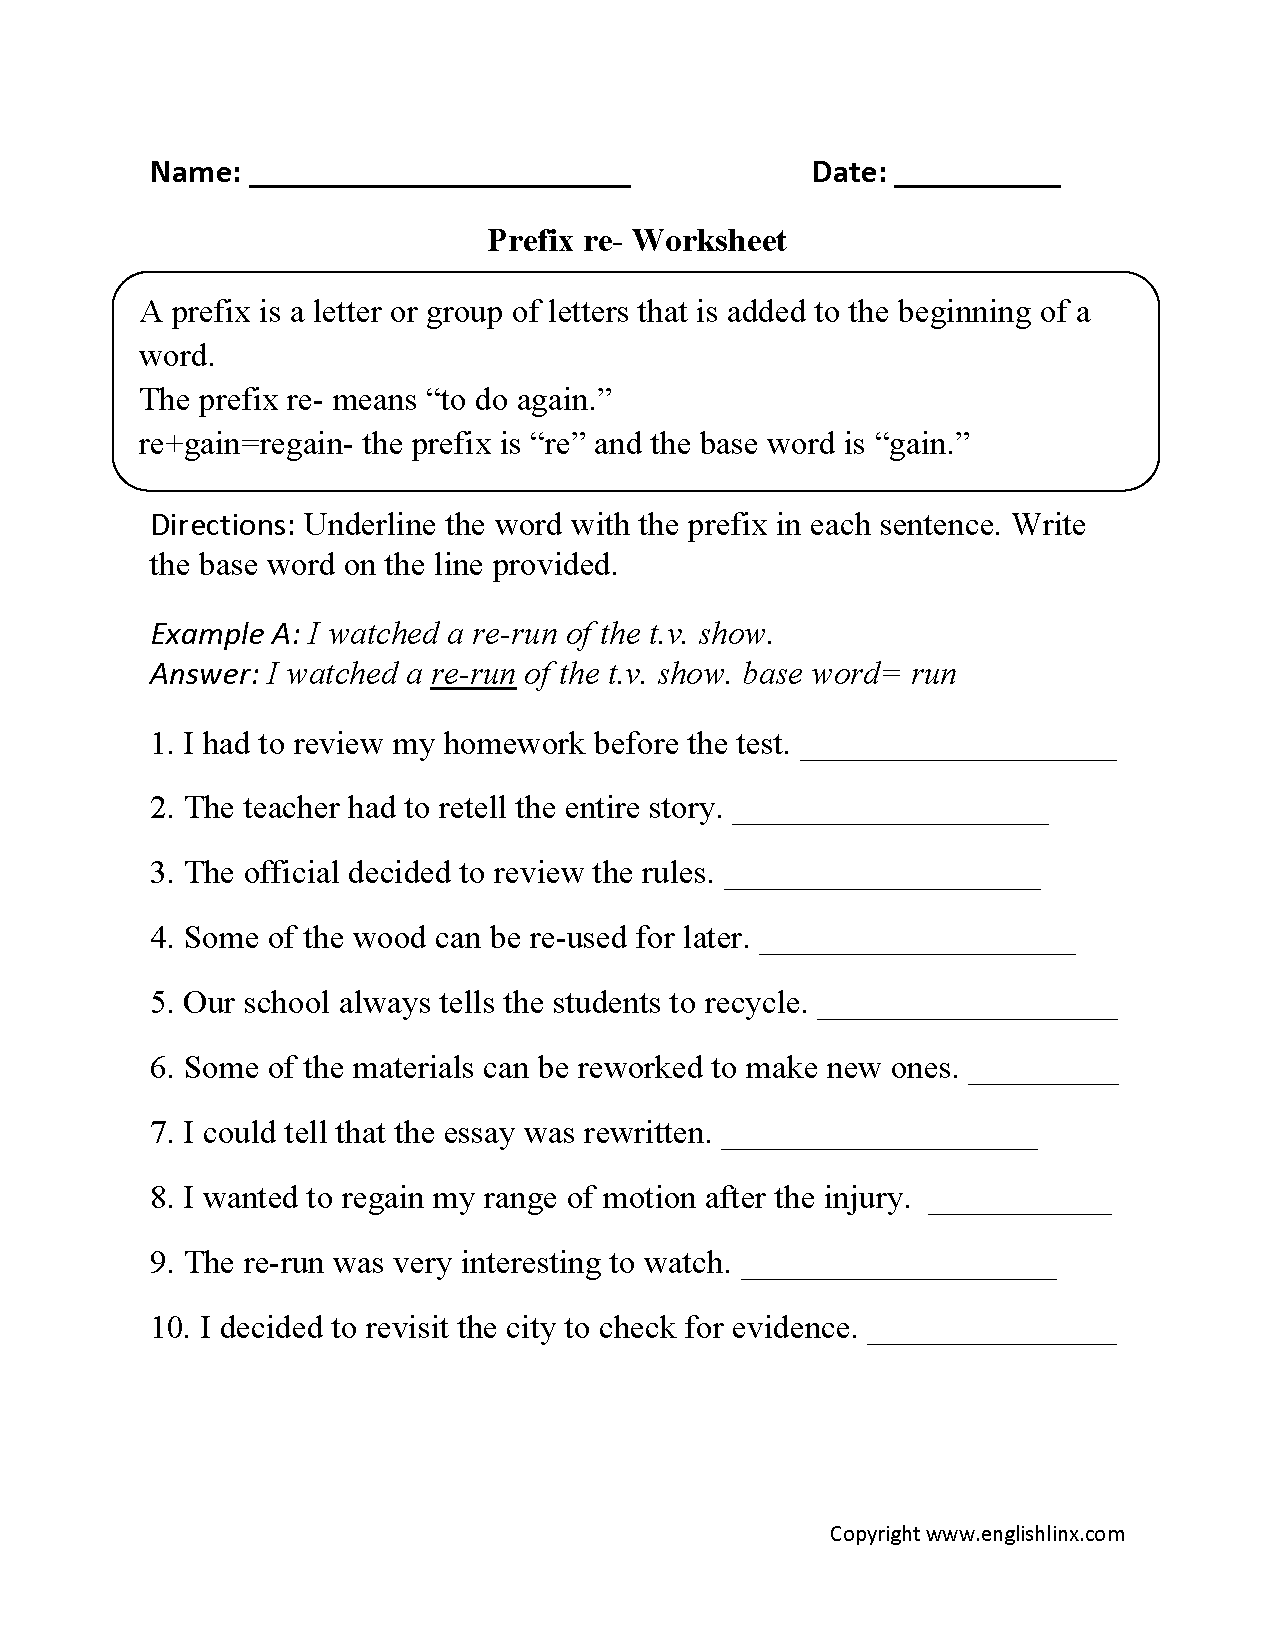 Prefix re- Worksheet